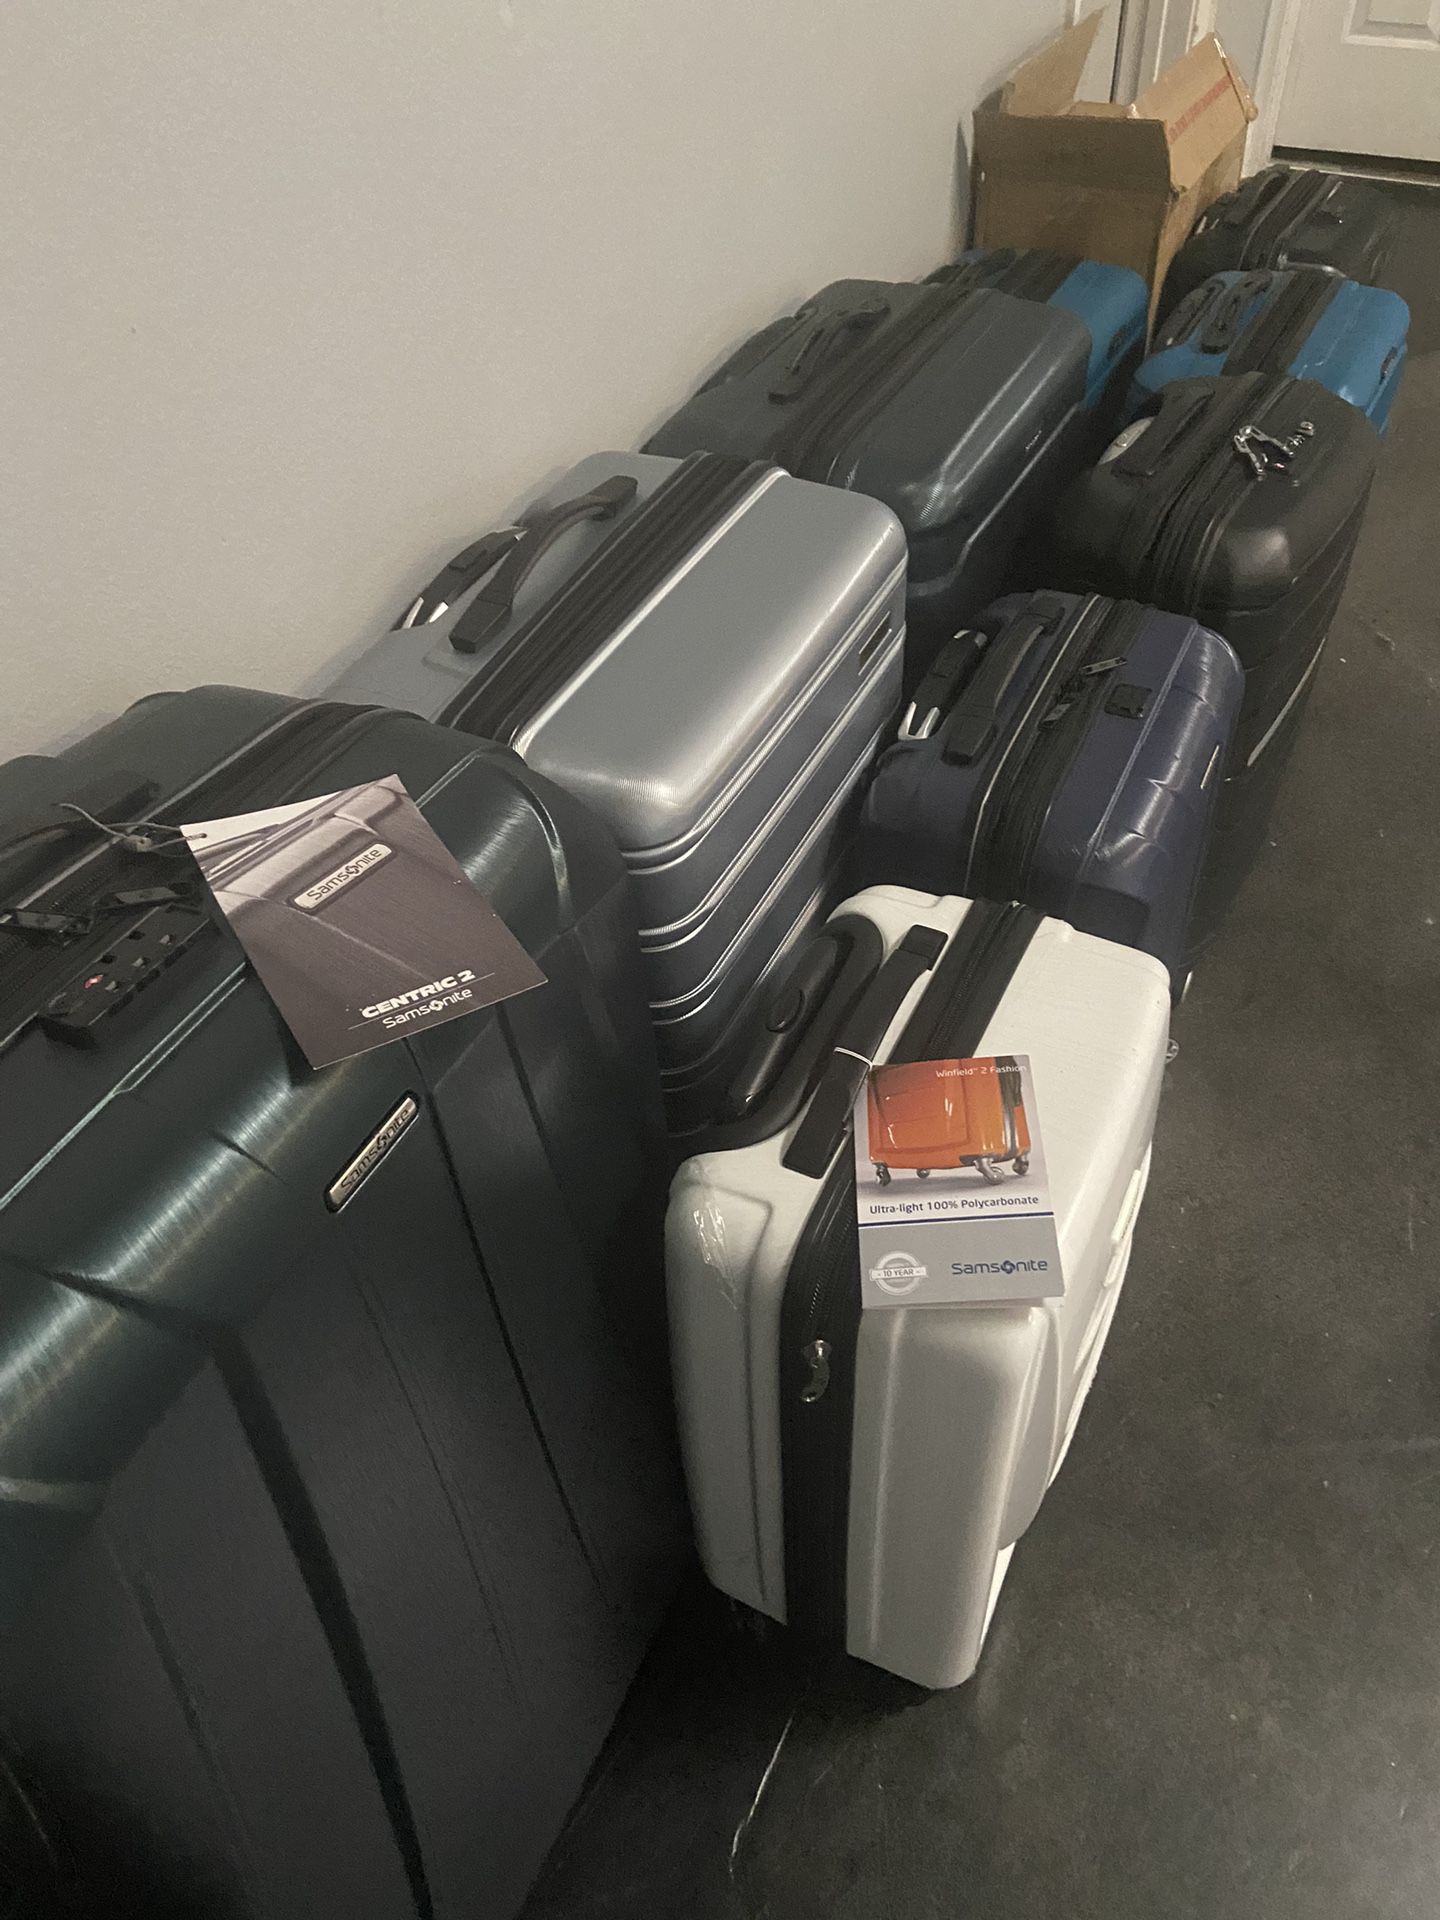 Samsonite Hard Case Luggage for Sale in Las Vegas, NV - OfferUp